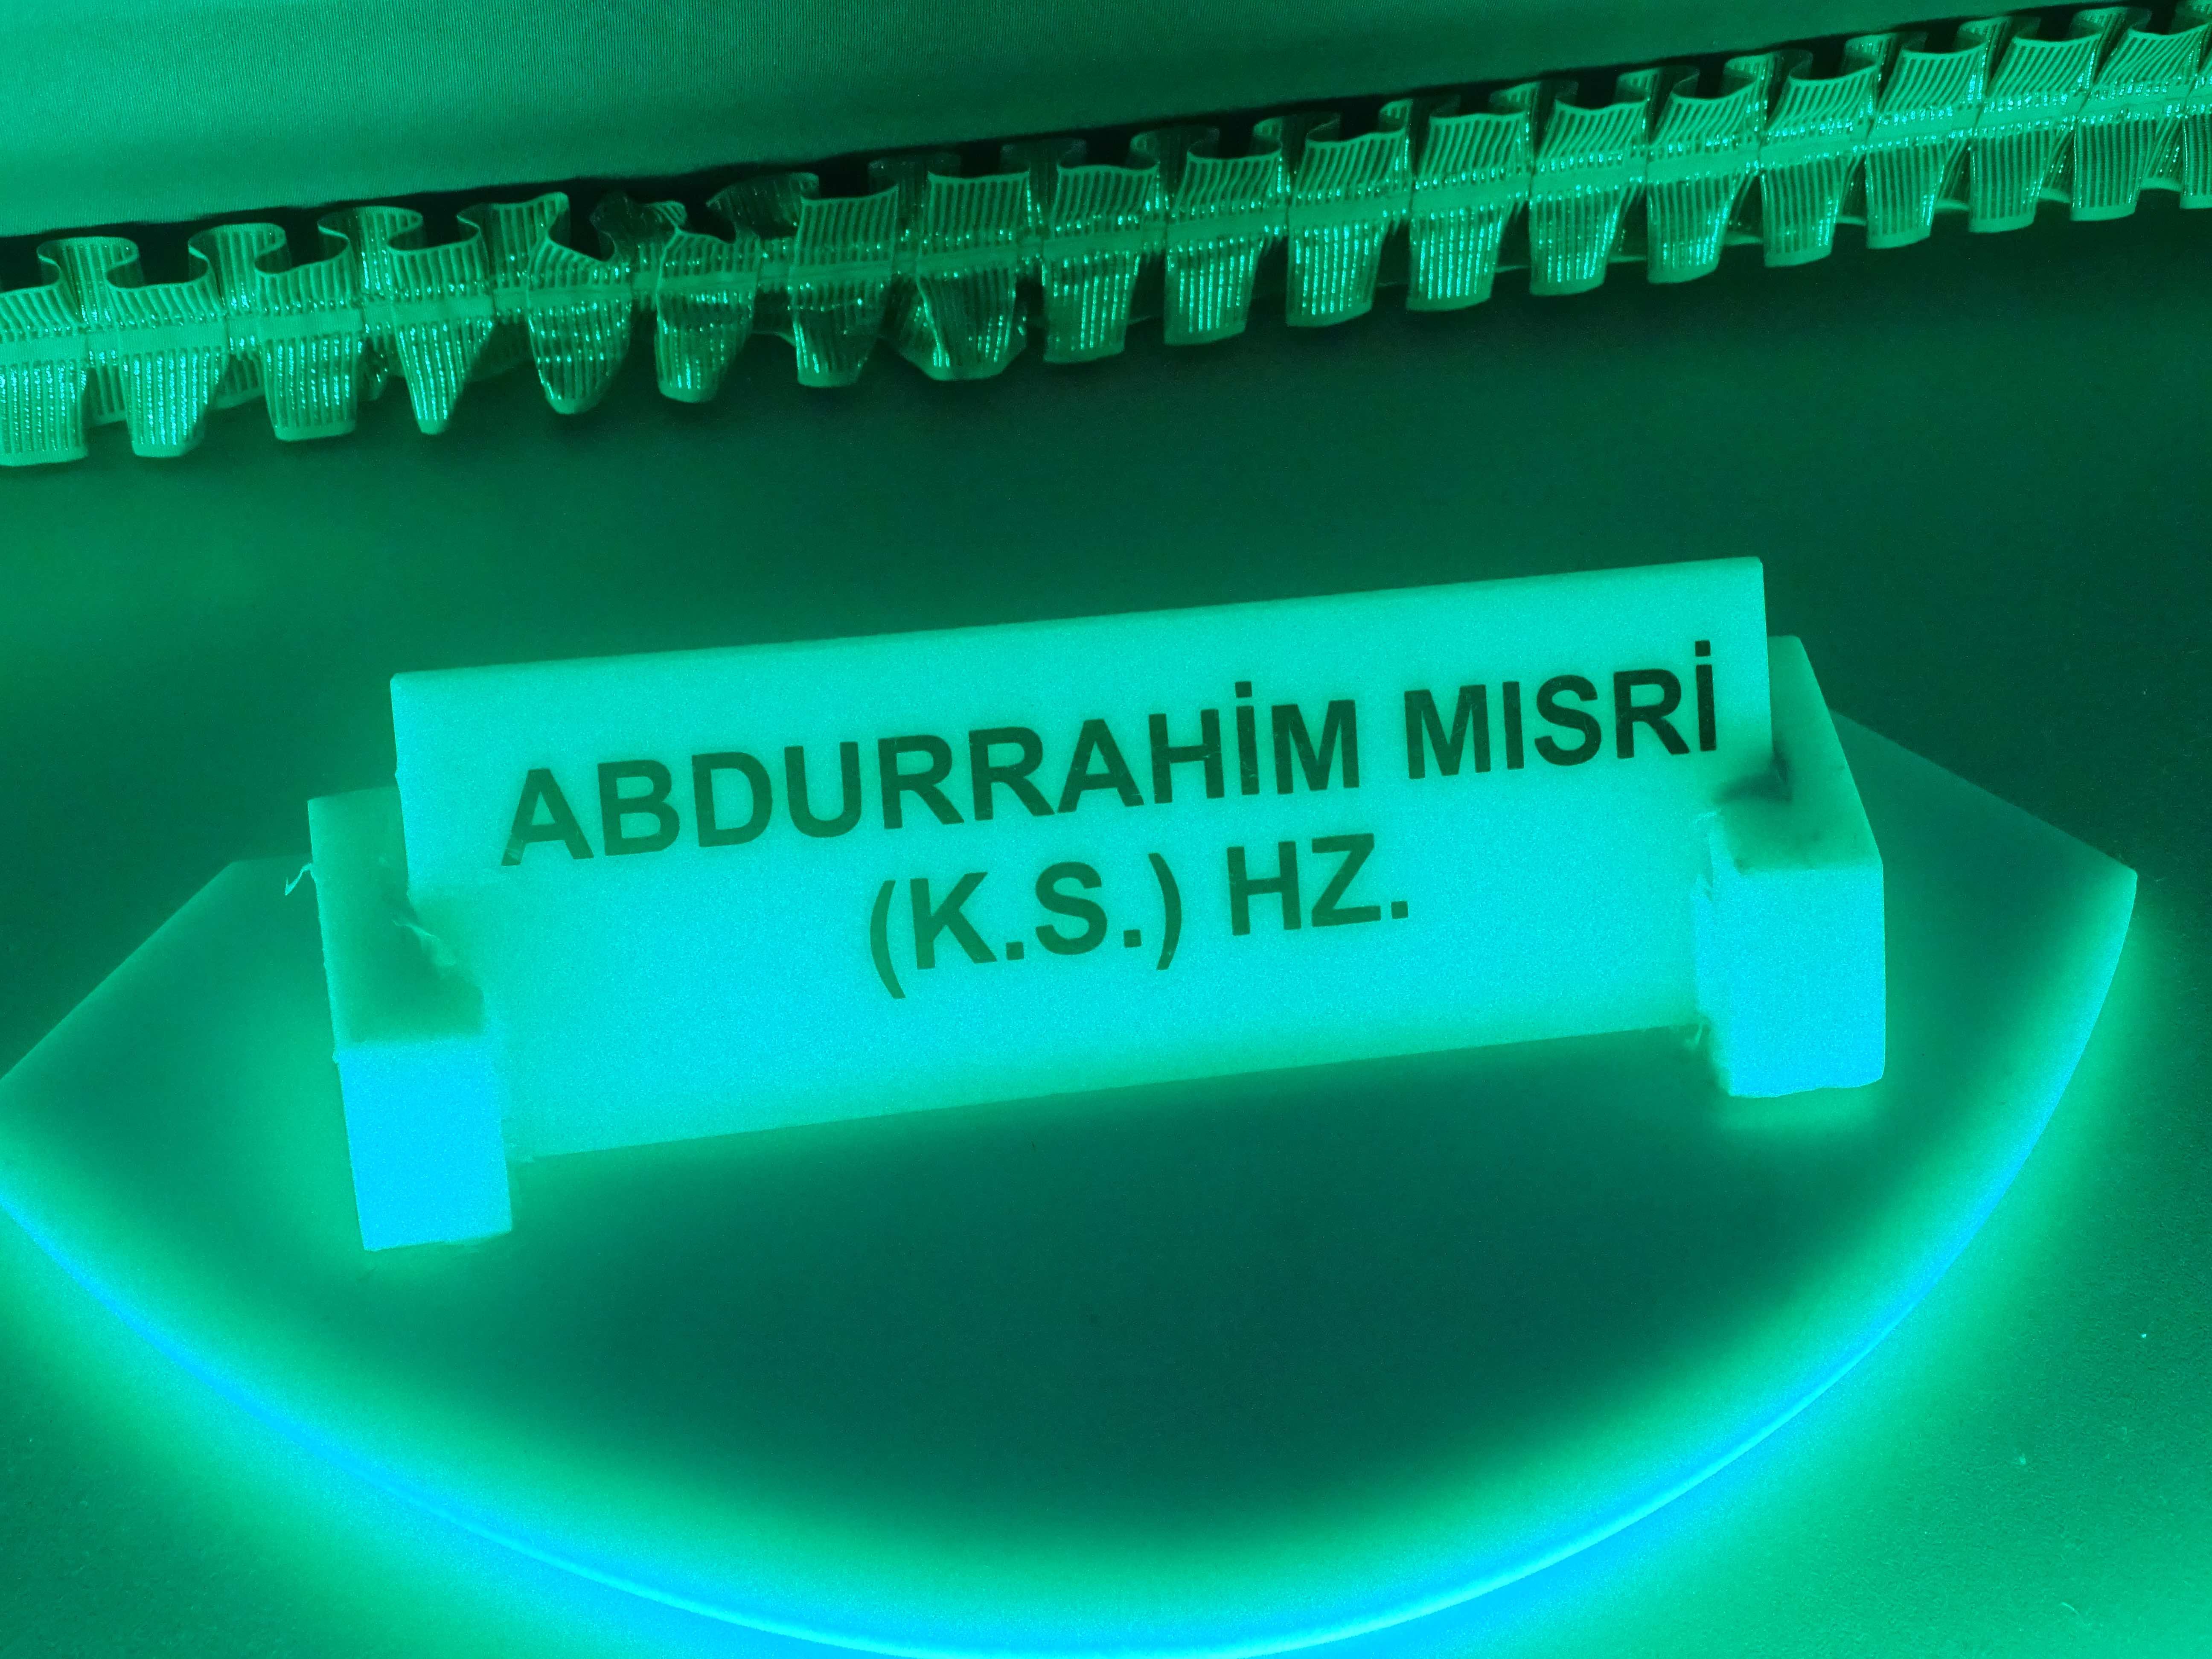 Abdurrahim Mısri (k.s.)